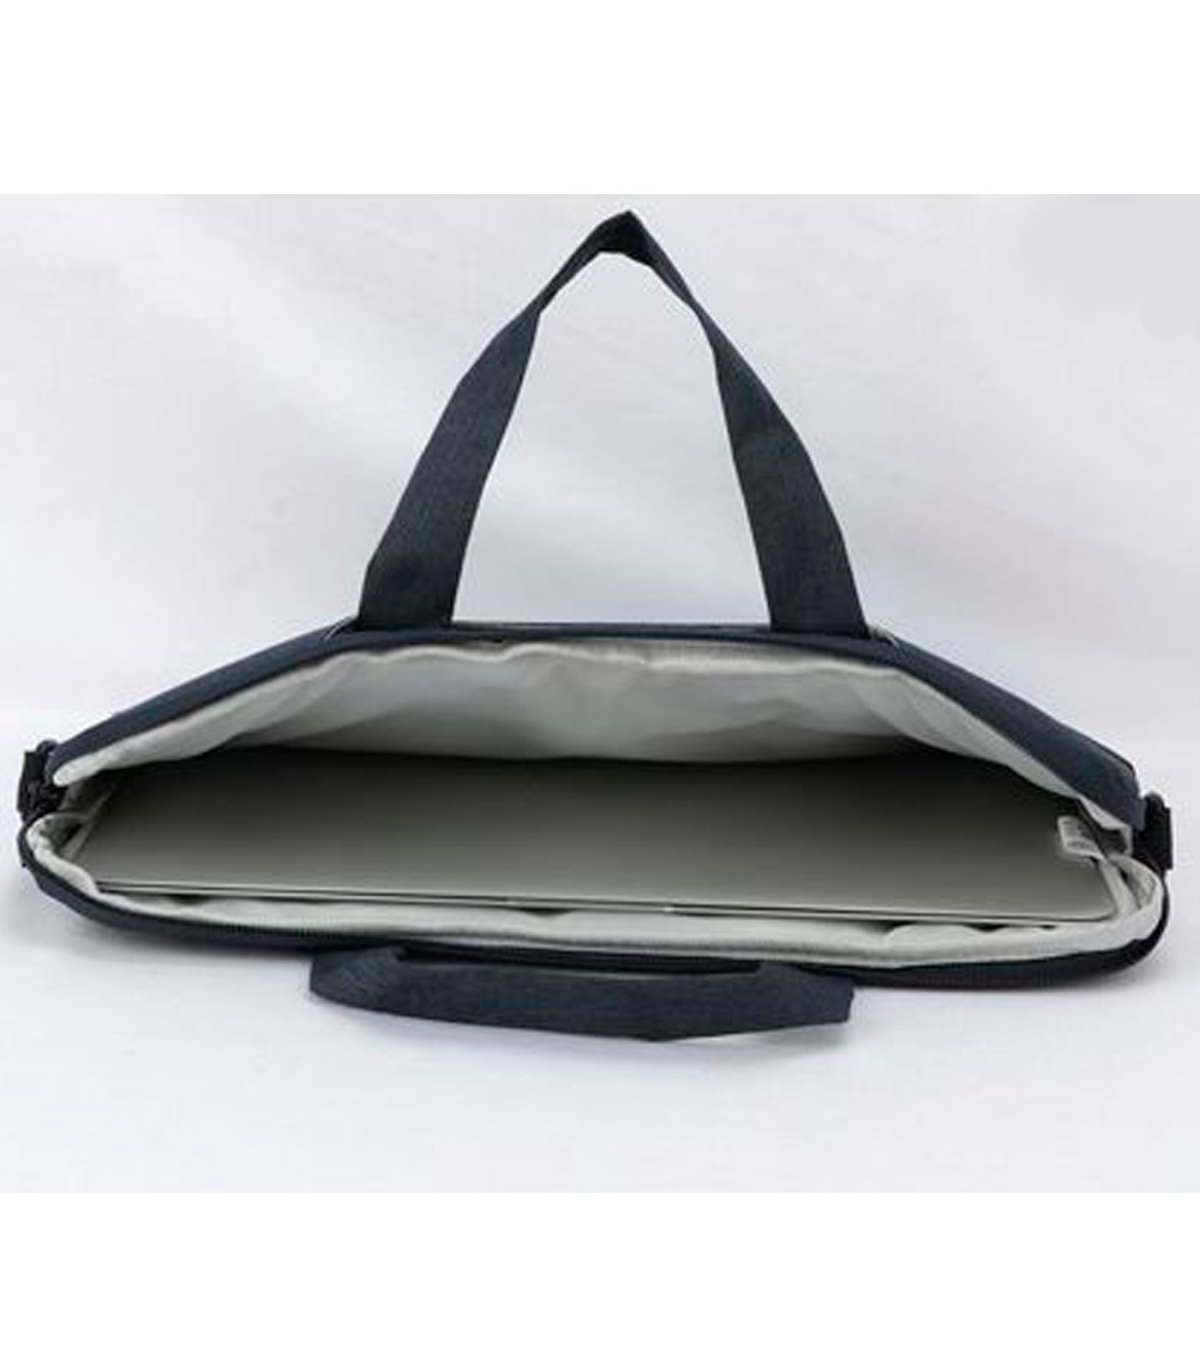 Tradineur - Bolsa para portátil de 11-12 pulgadas, bolso, funda, bandolera,  maletín de tela impermeable con asas y correa de hom